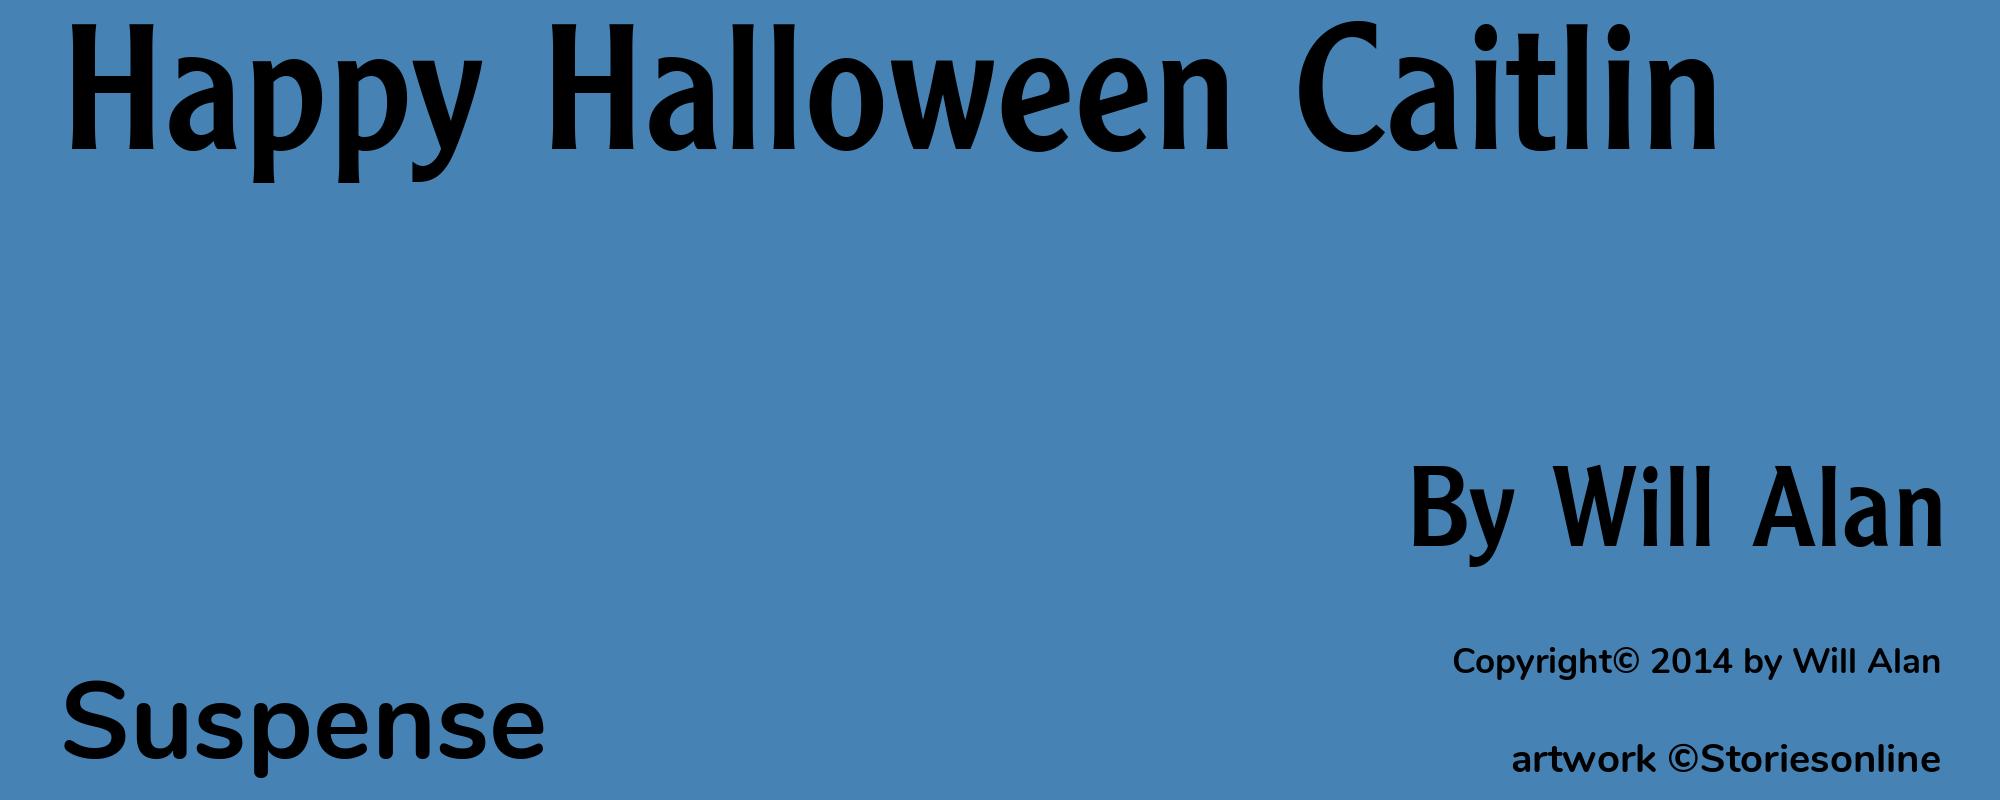 Happy Halloween Caitlin - Cover